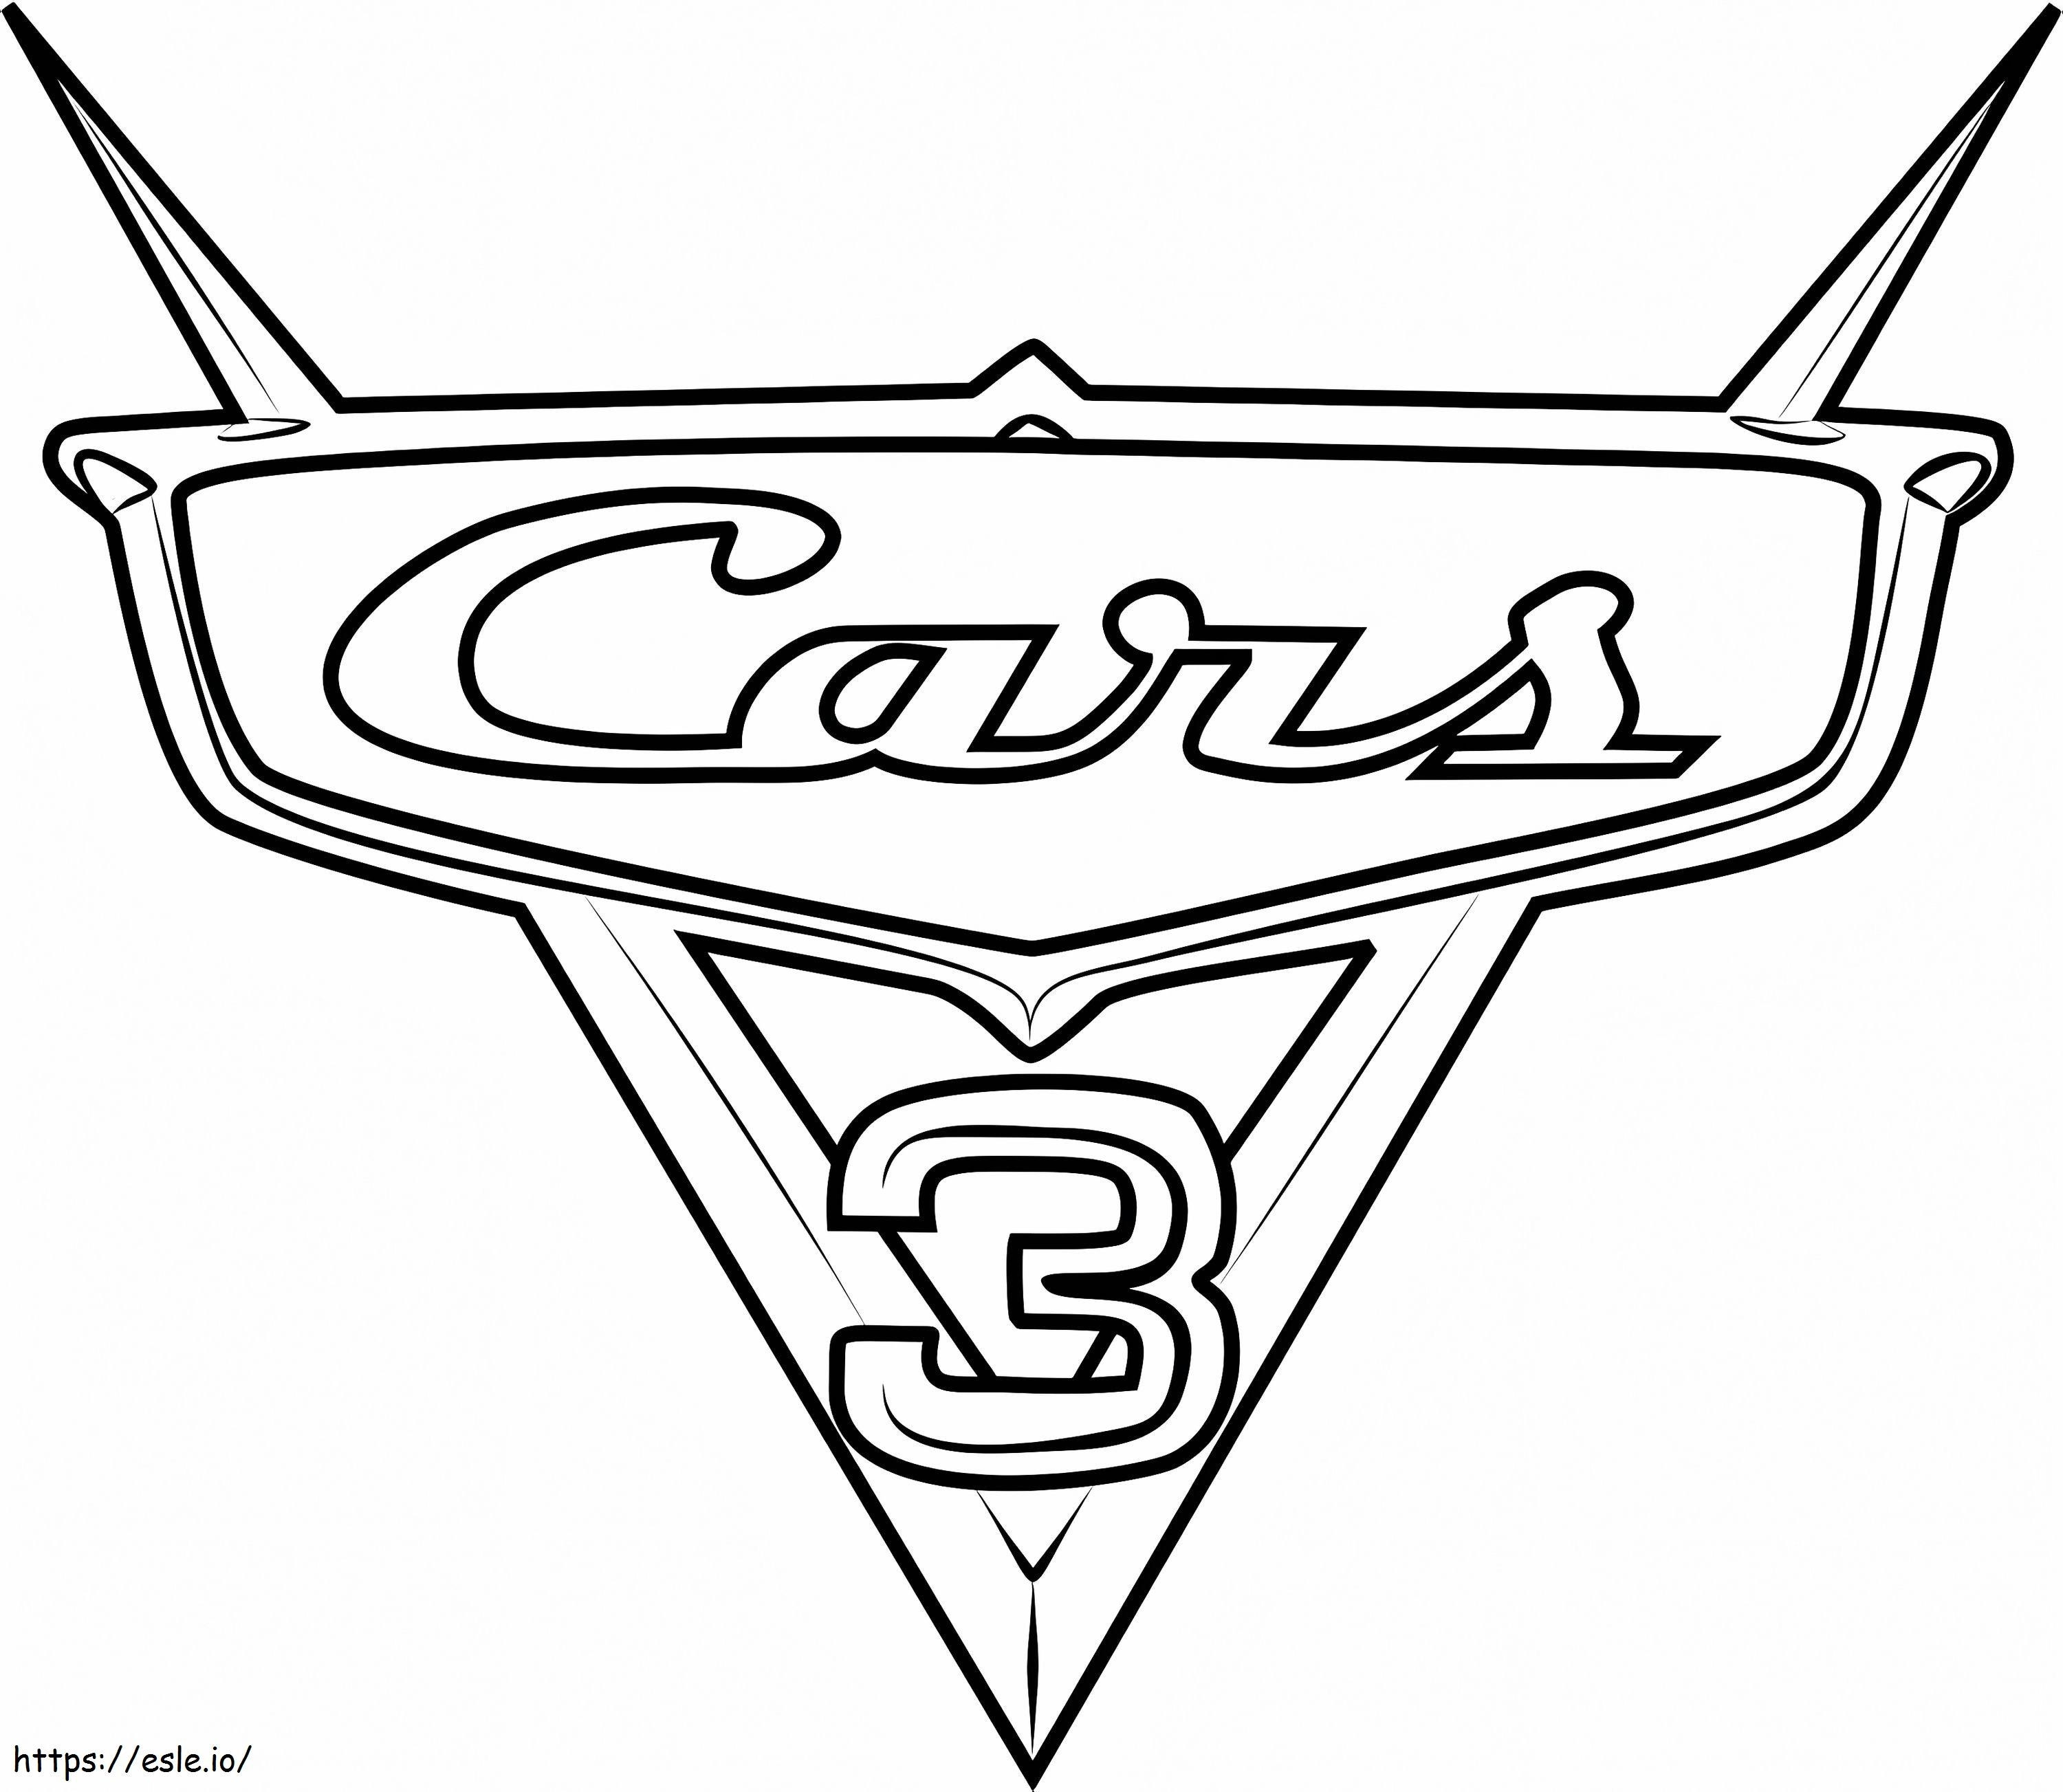  Logotipo de Cars 3 de Cars 31 para colorear